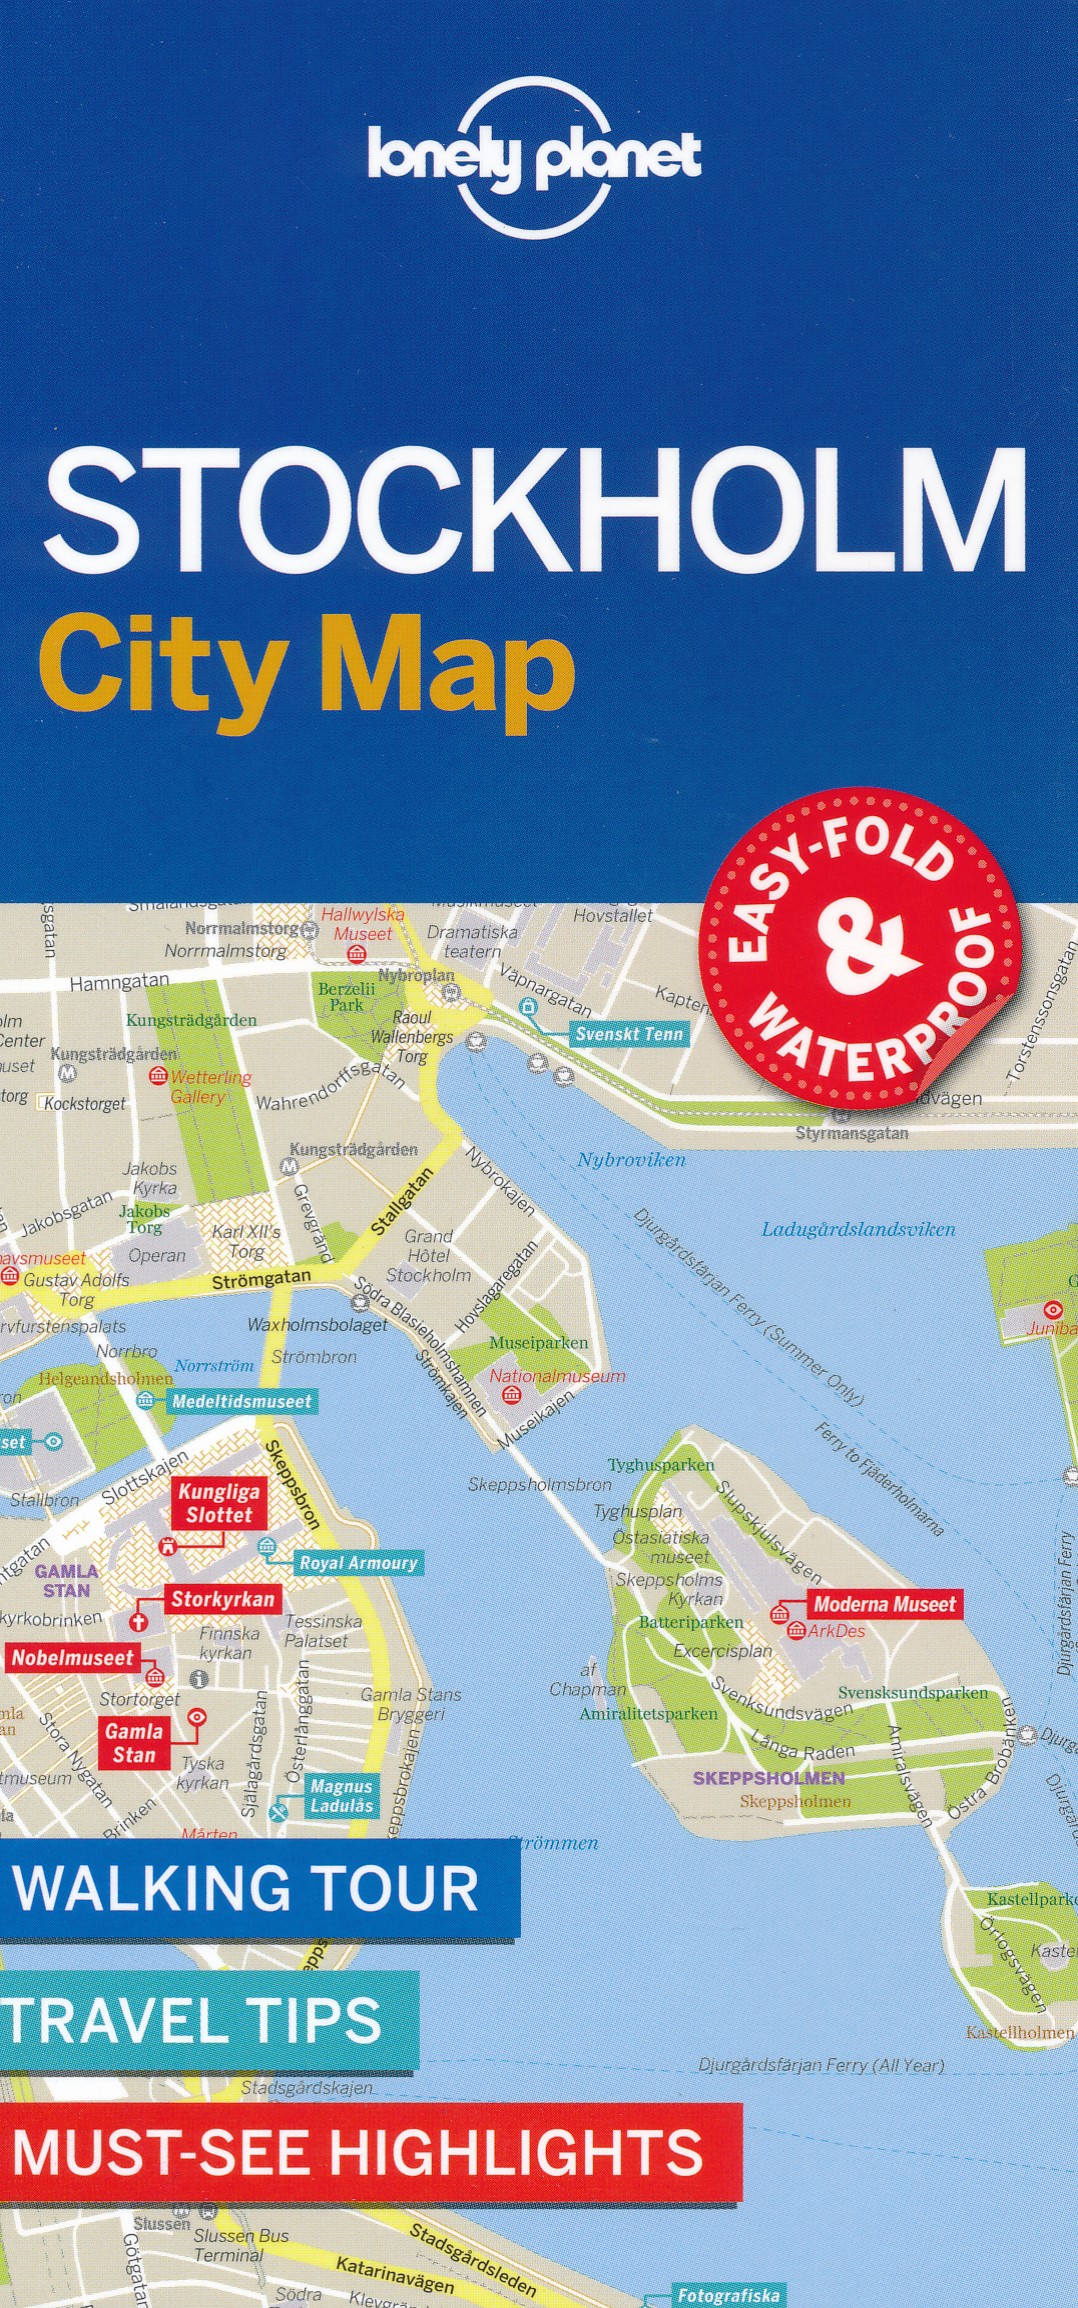 Online bestellen: Stadsplattegrond City map Stockholm | Lonely Planet